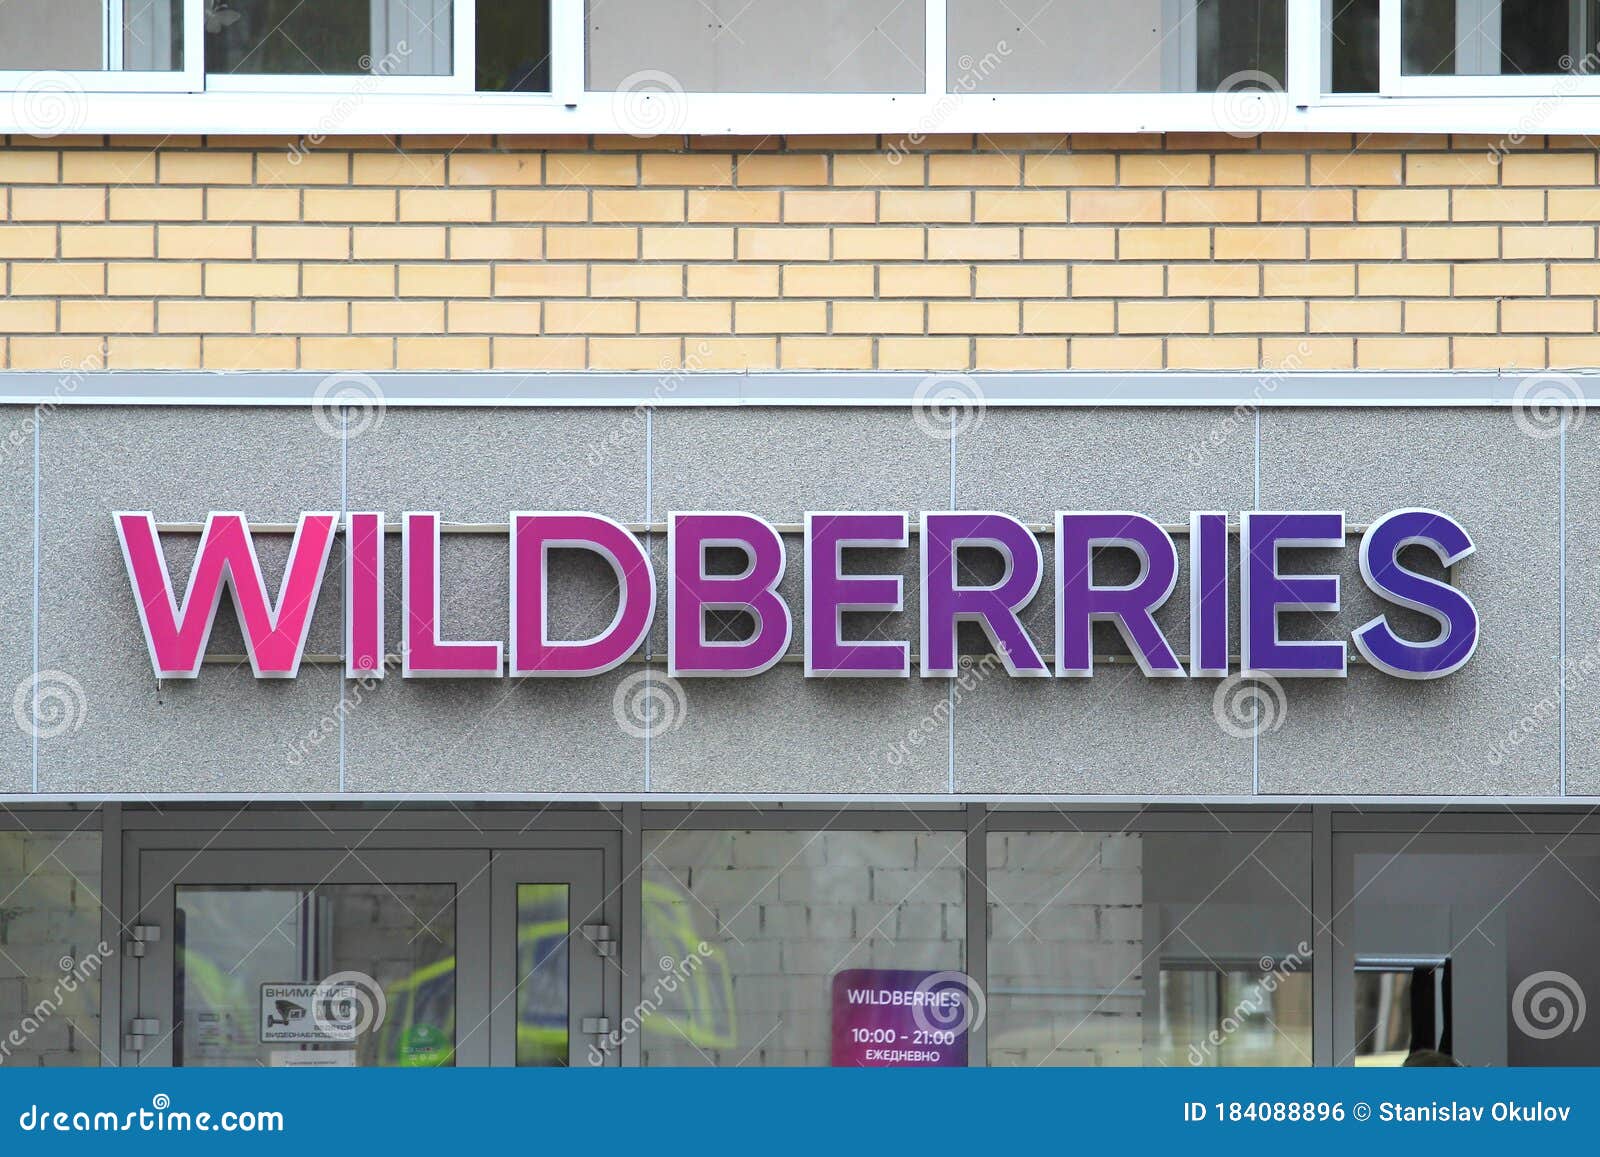 Валдбериес интернет магазин огород. Wildberries. Wildberries вывеска. Wildberries магазин. Вайлдберриз в США.